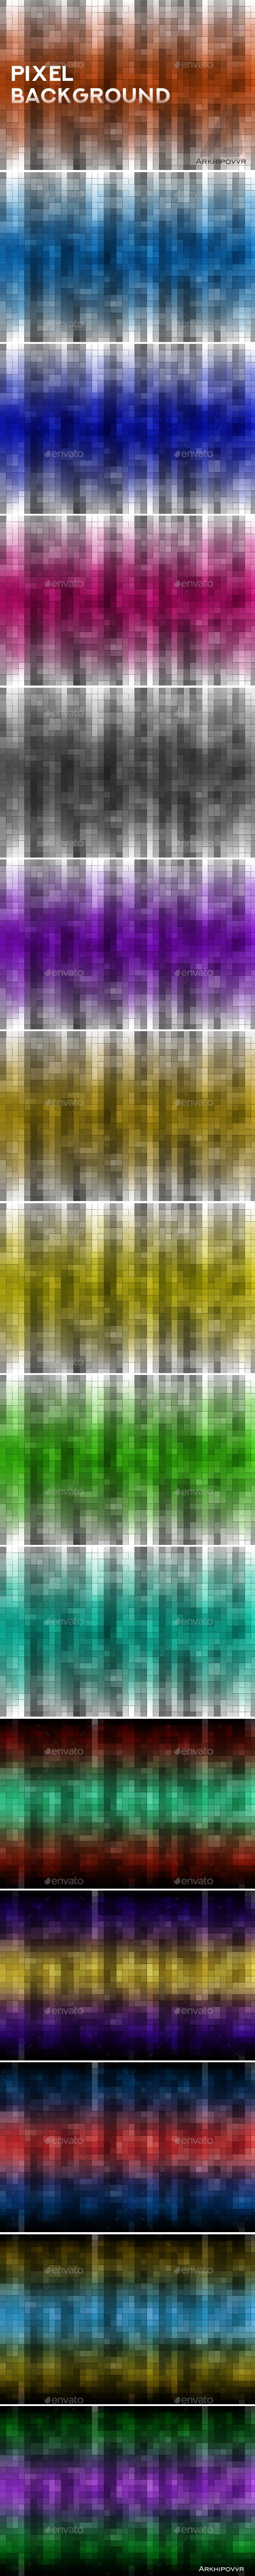 GraphicRiver Pixel Background 21002228